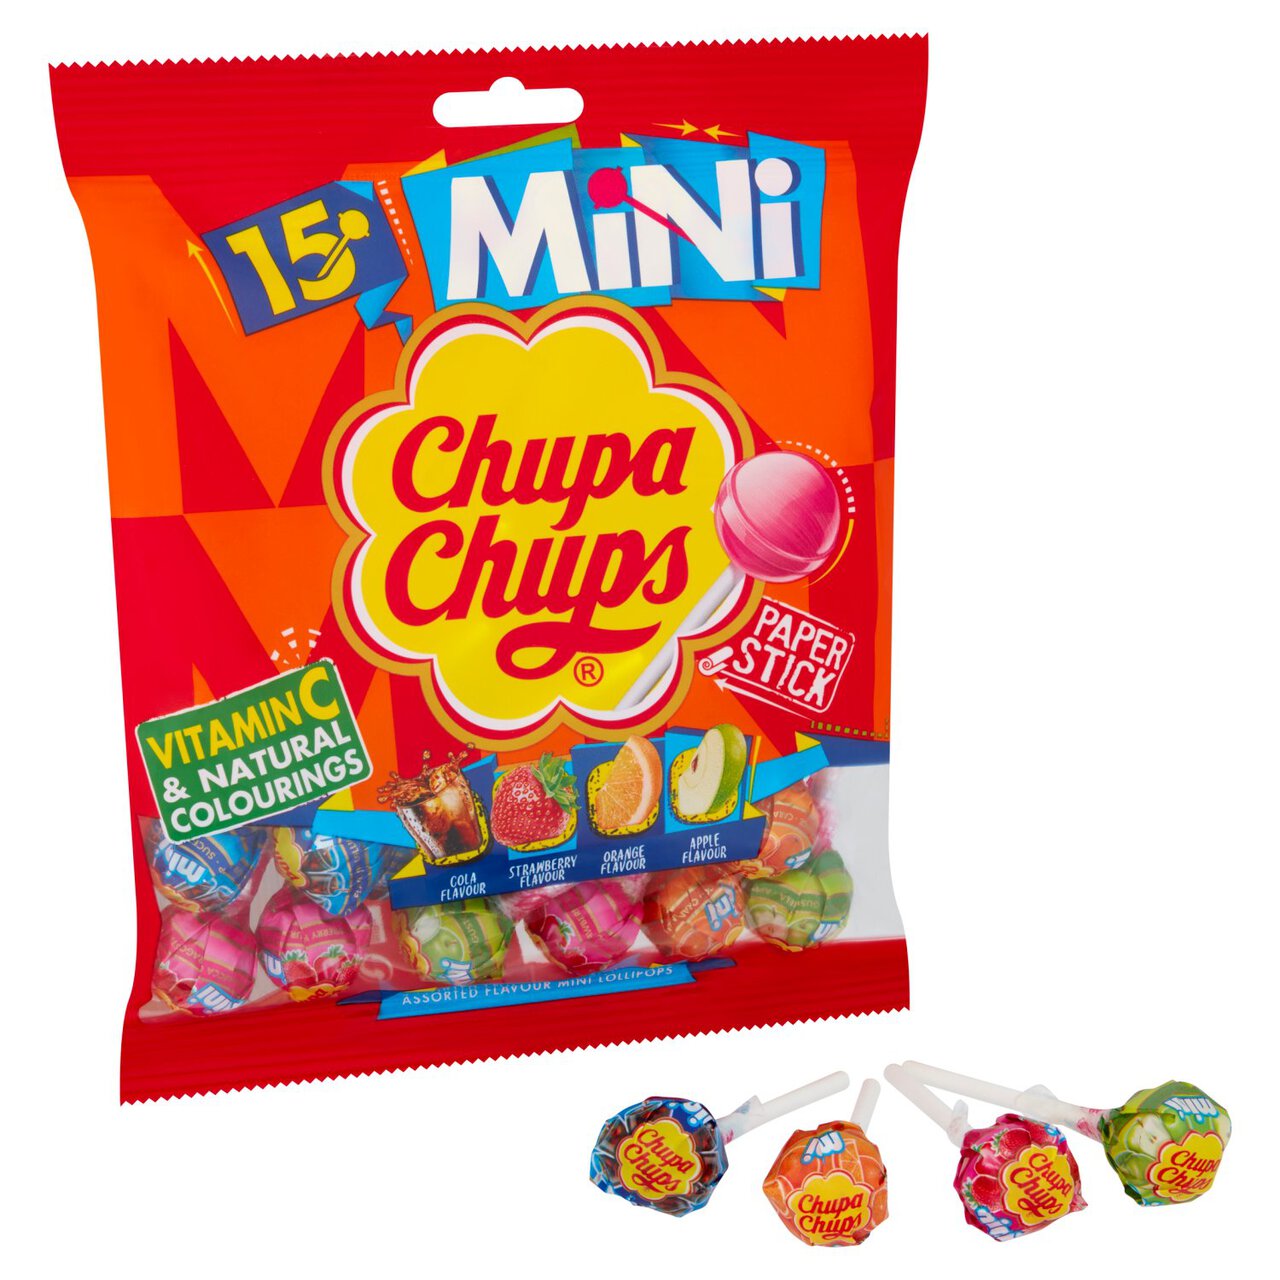 Chupa Chups Mini Chupa Chups Mini Lollipops Sharing Bag 90g